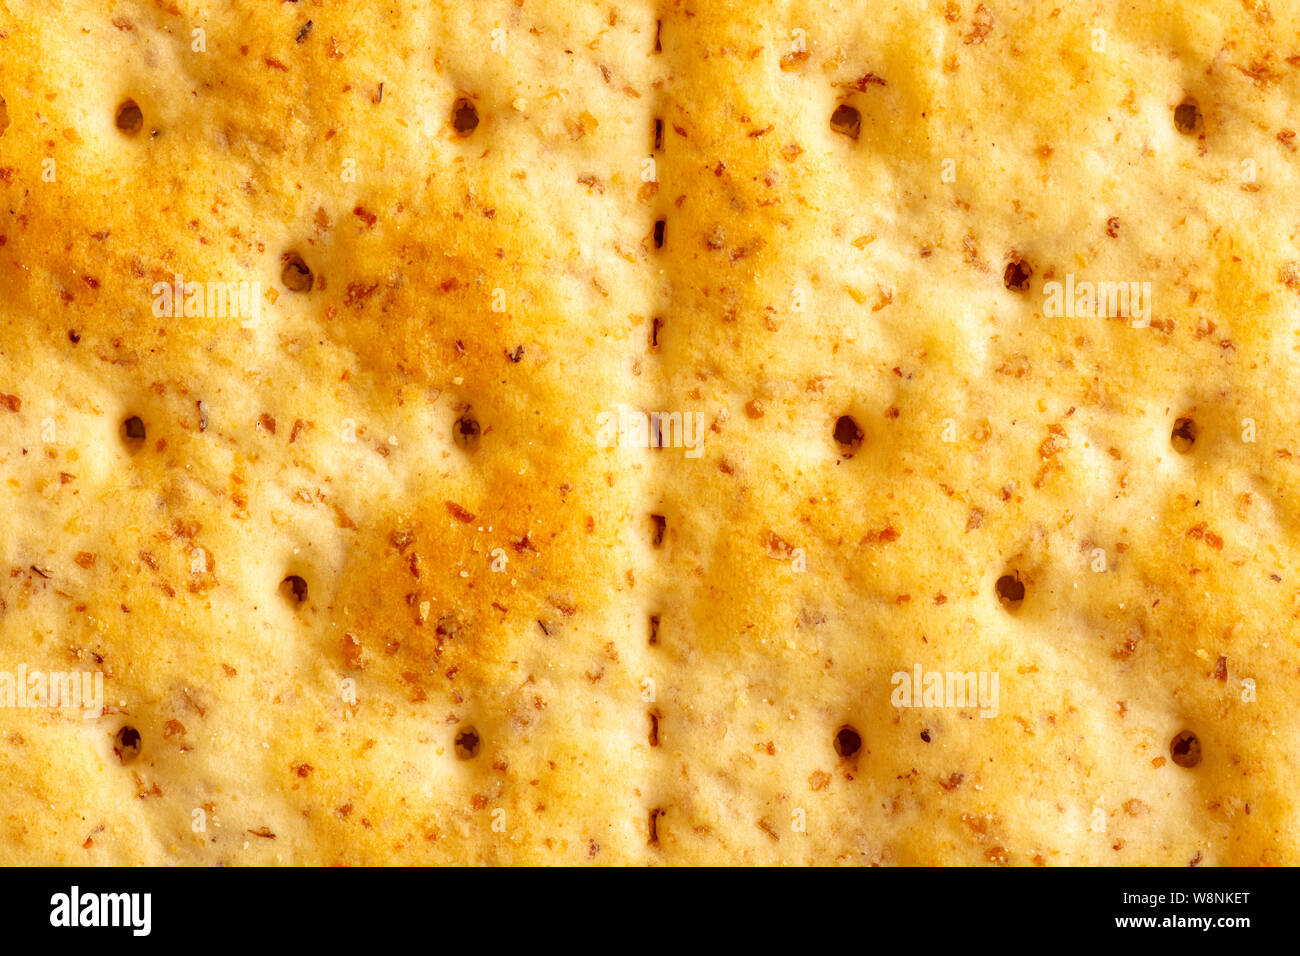 Whole Wheat Cracker Texture Close Up Stock Photo